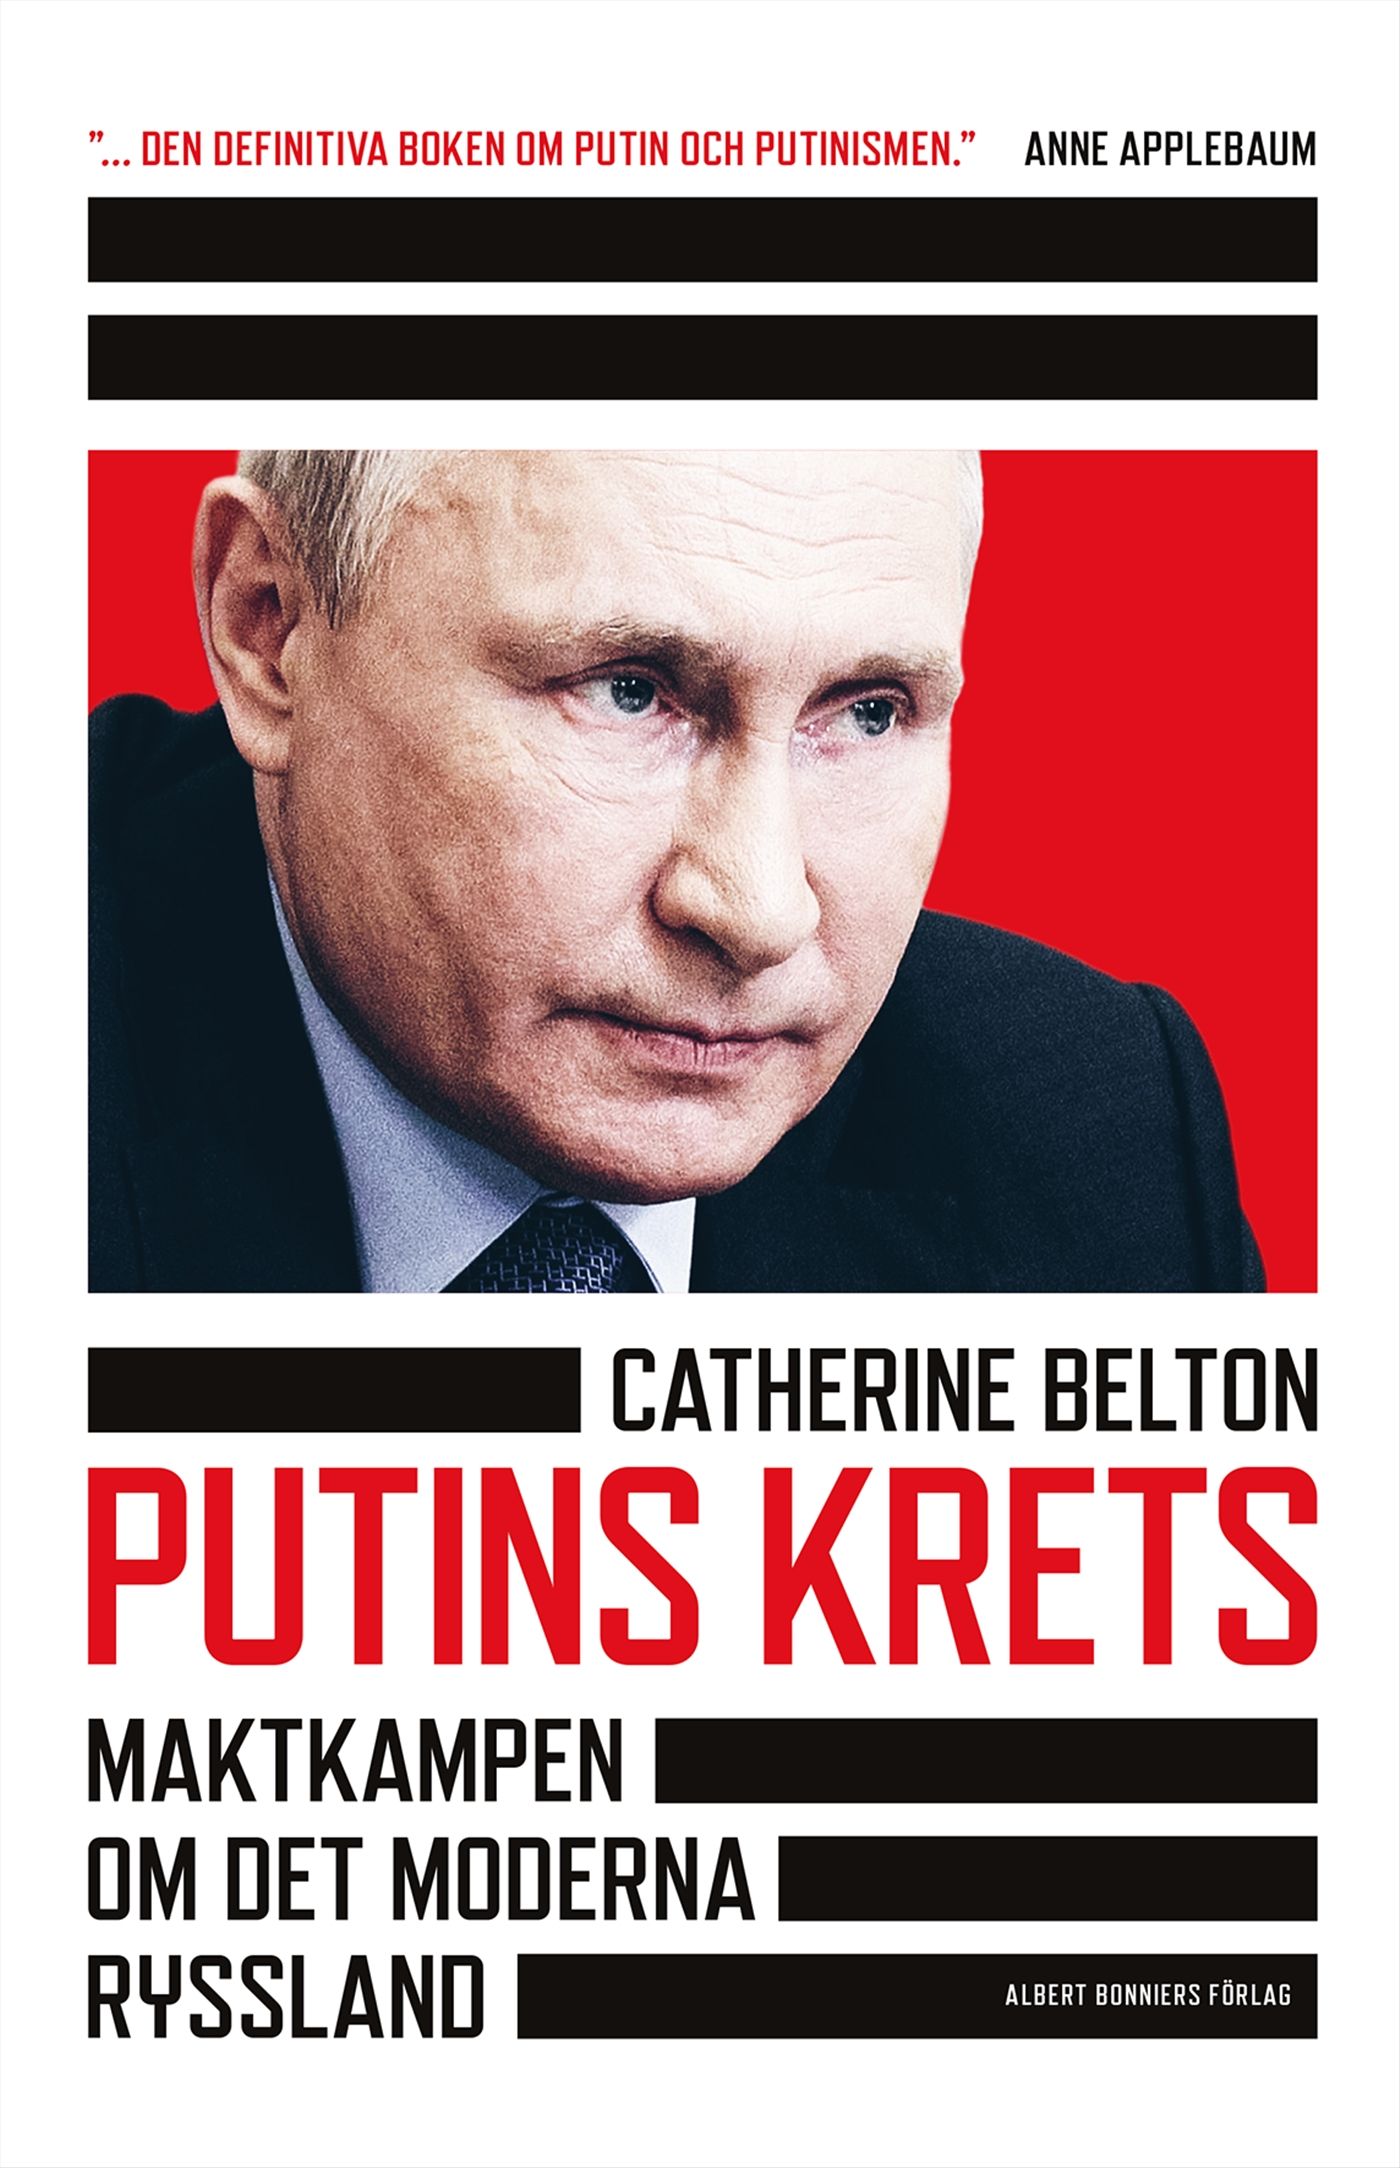 Putins krets, eBook by Catherine Belton